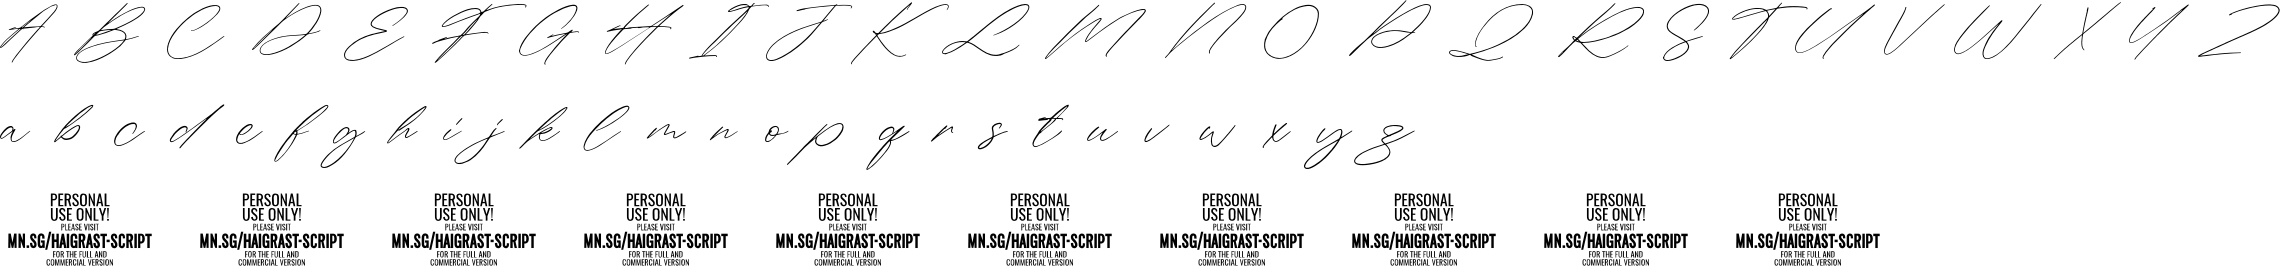 Haigrast Script Character Map